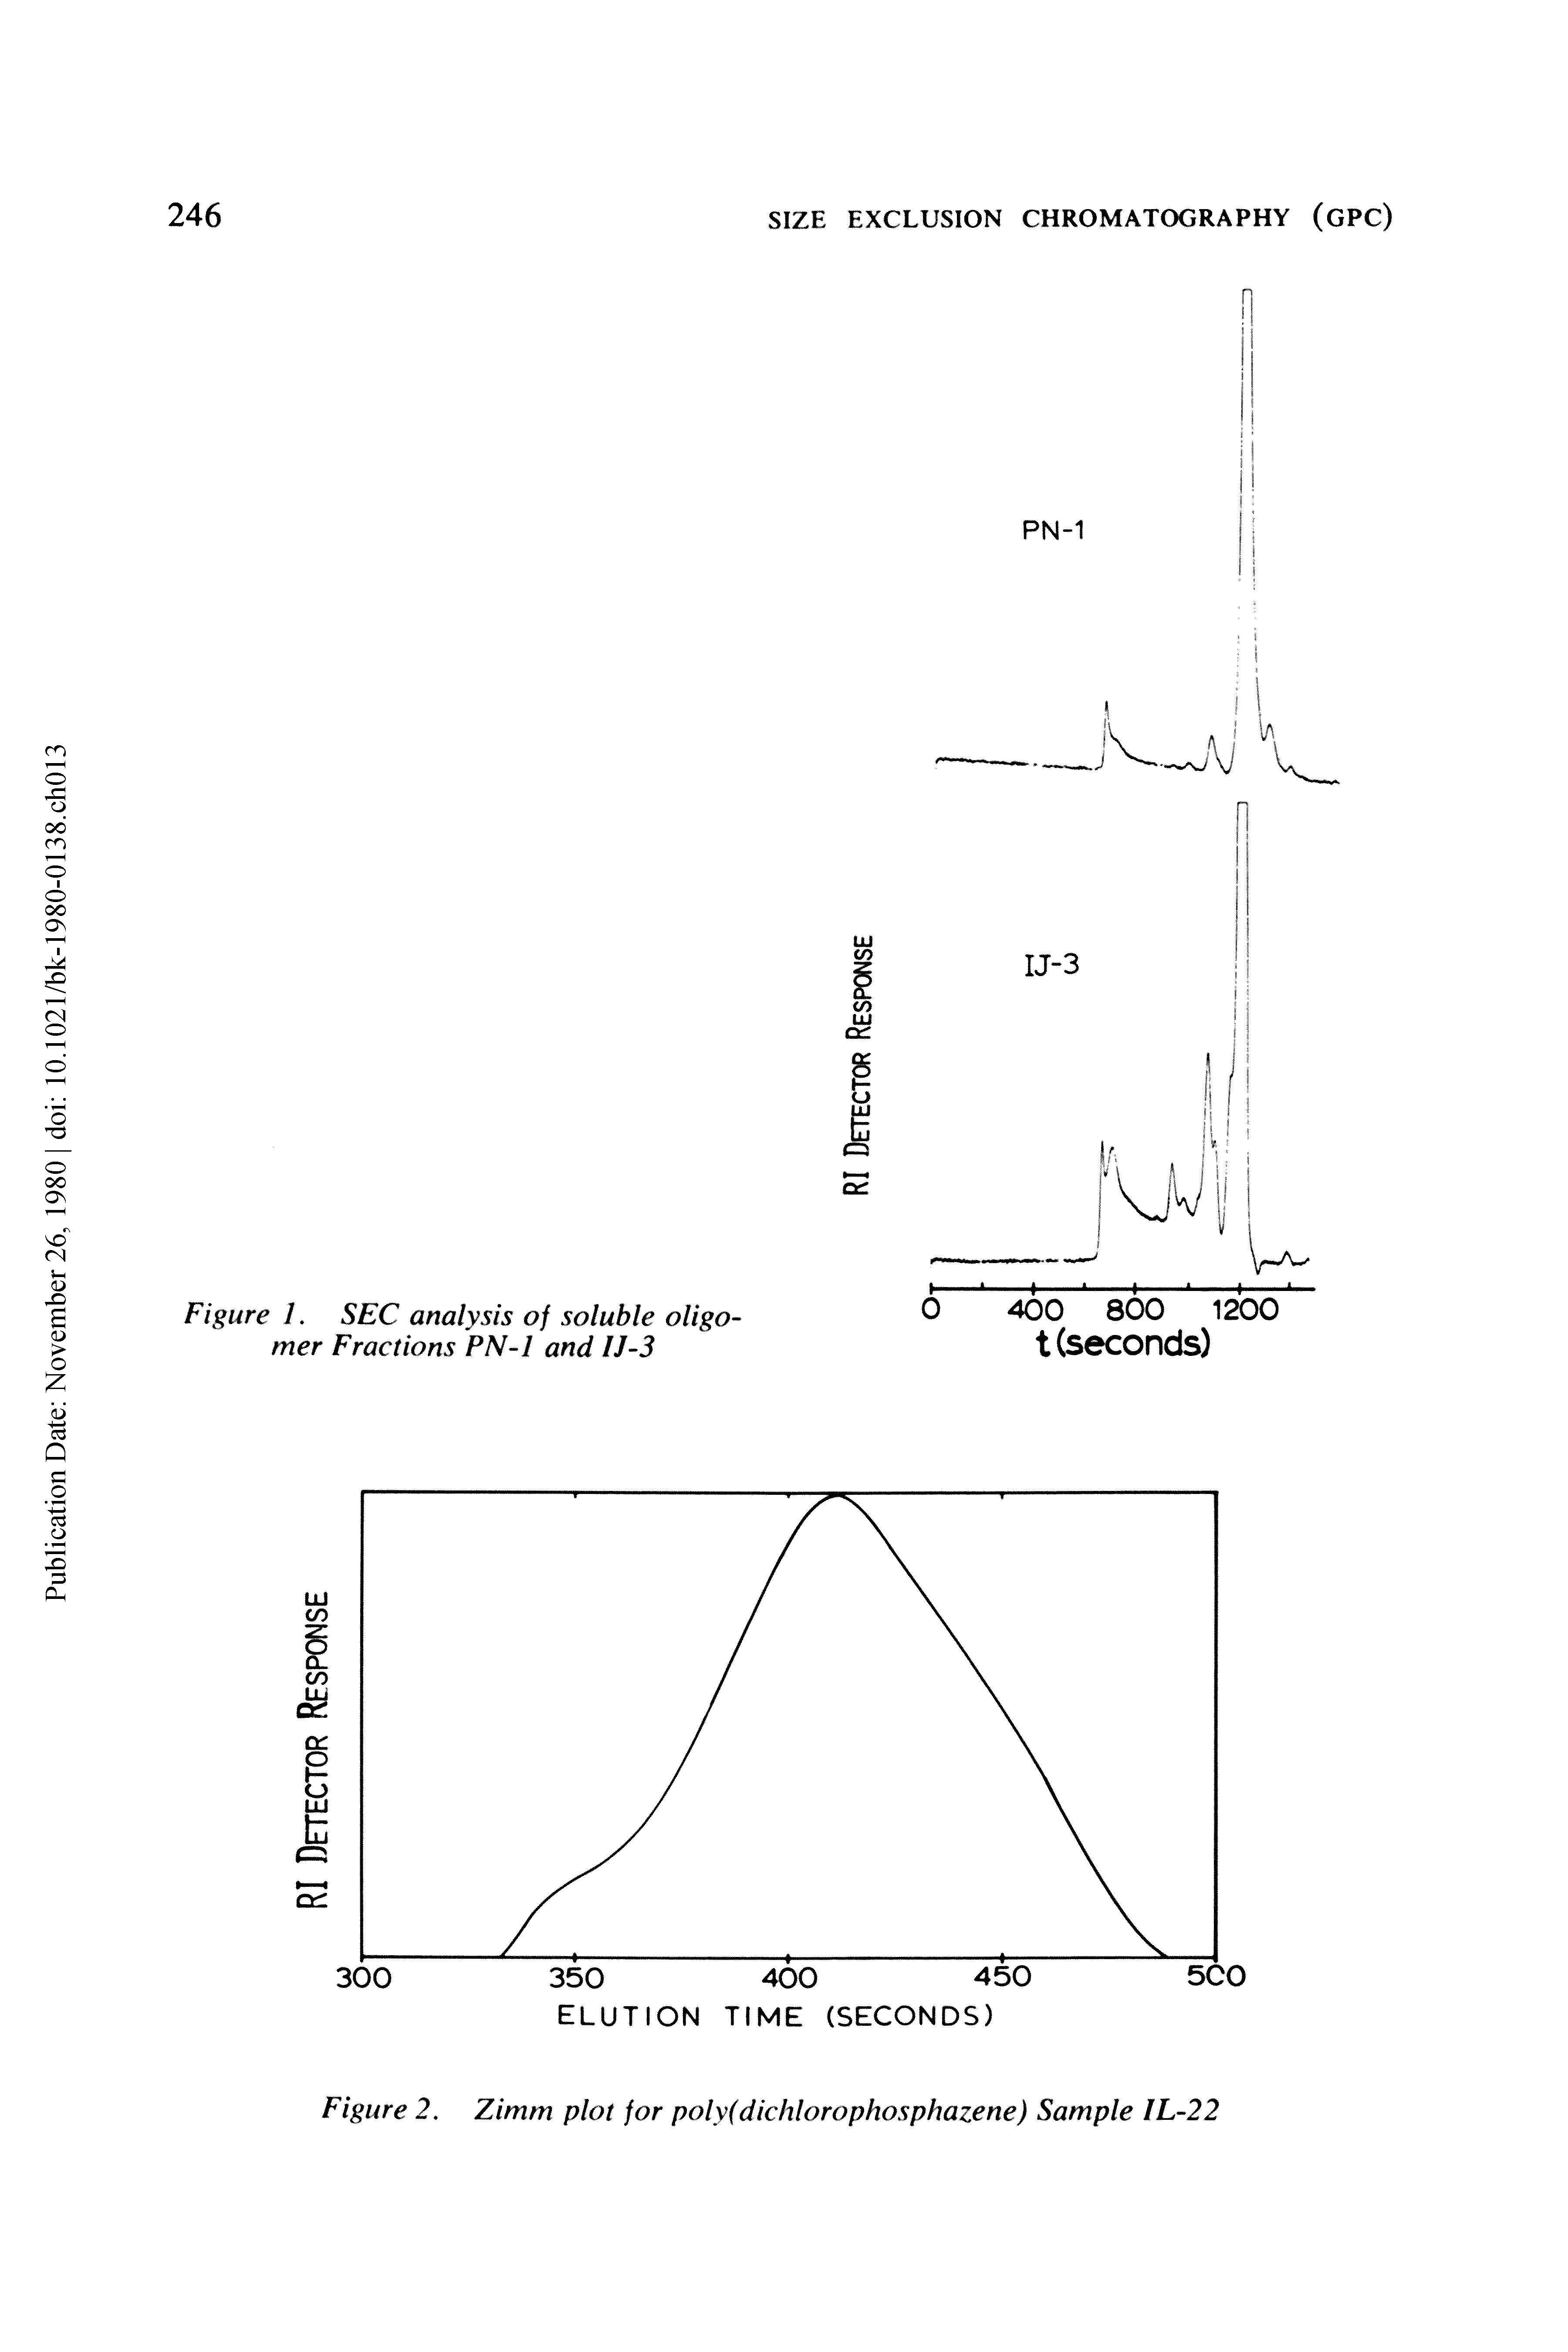 Figure 2. Zimm plot for poly(dichlorophosphazene) Sample IL-22...